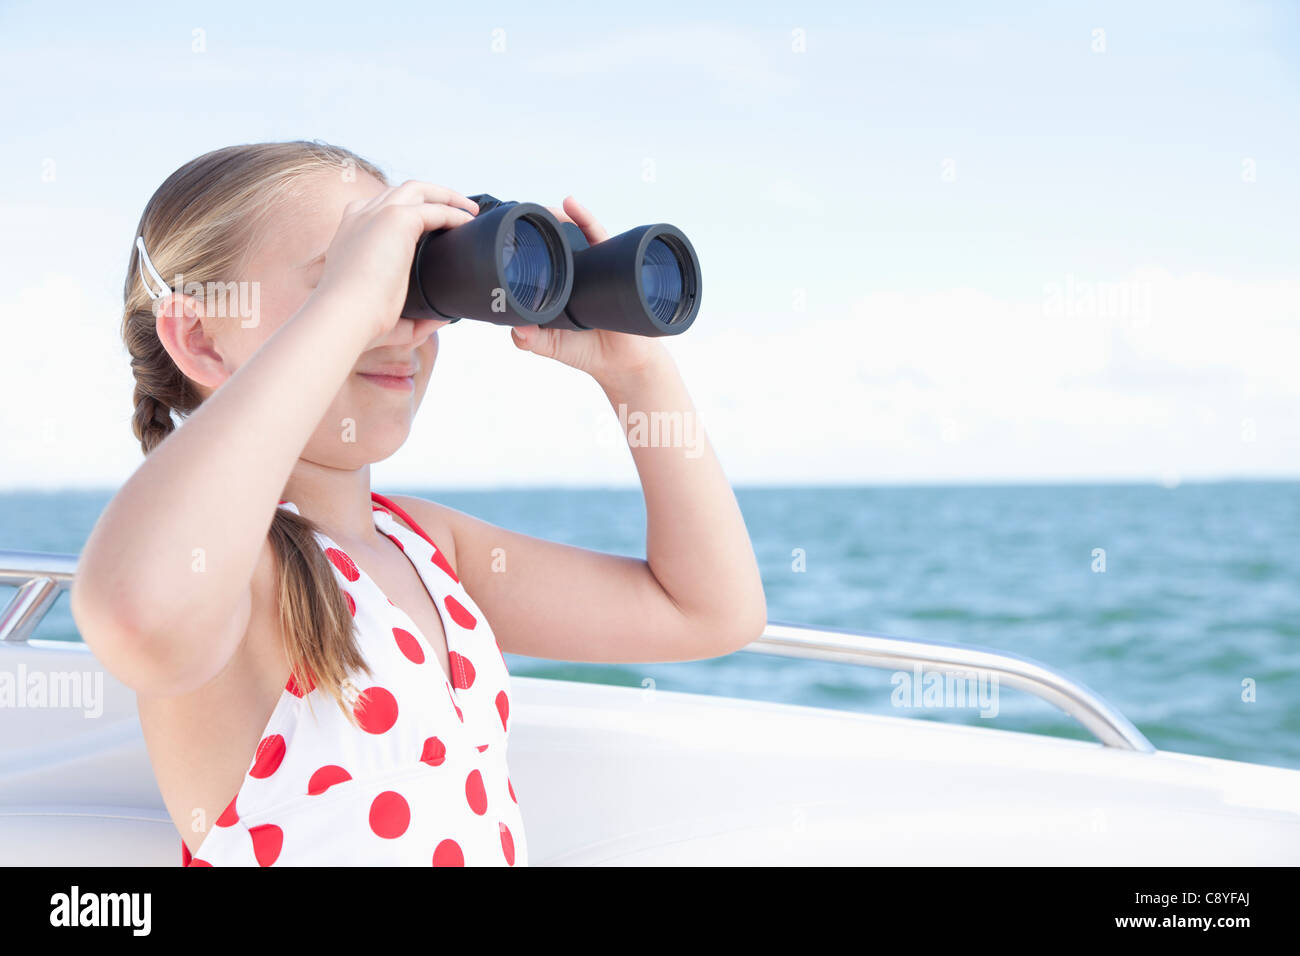 USA, Florida, St. Petersburg, Girl (10-11) on yacht looking through binoculars Stock Photo